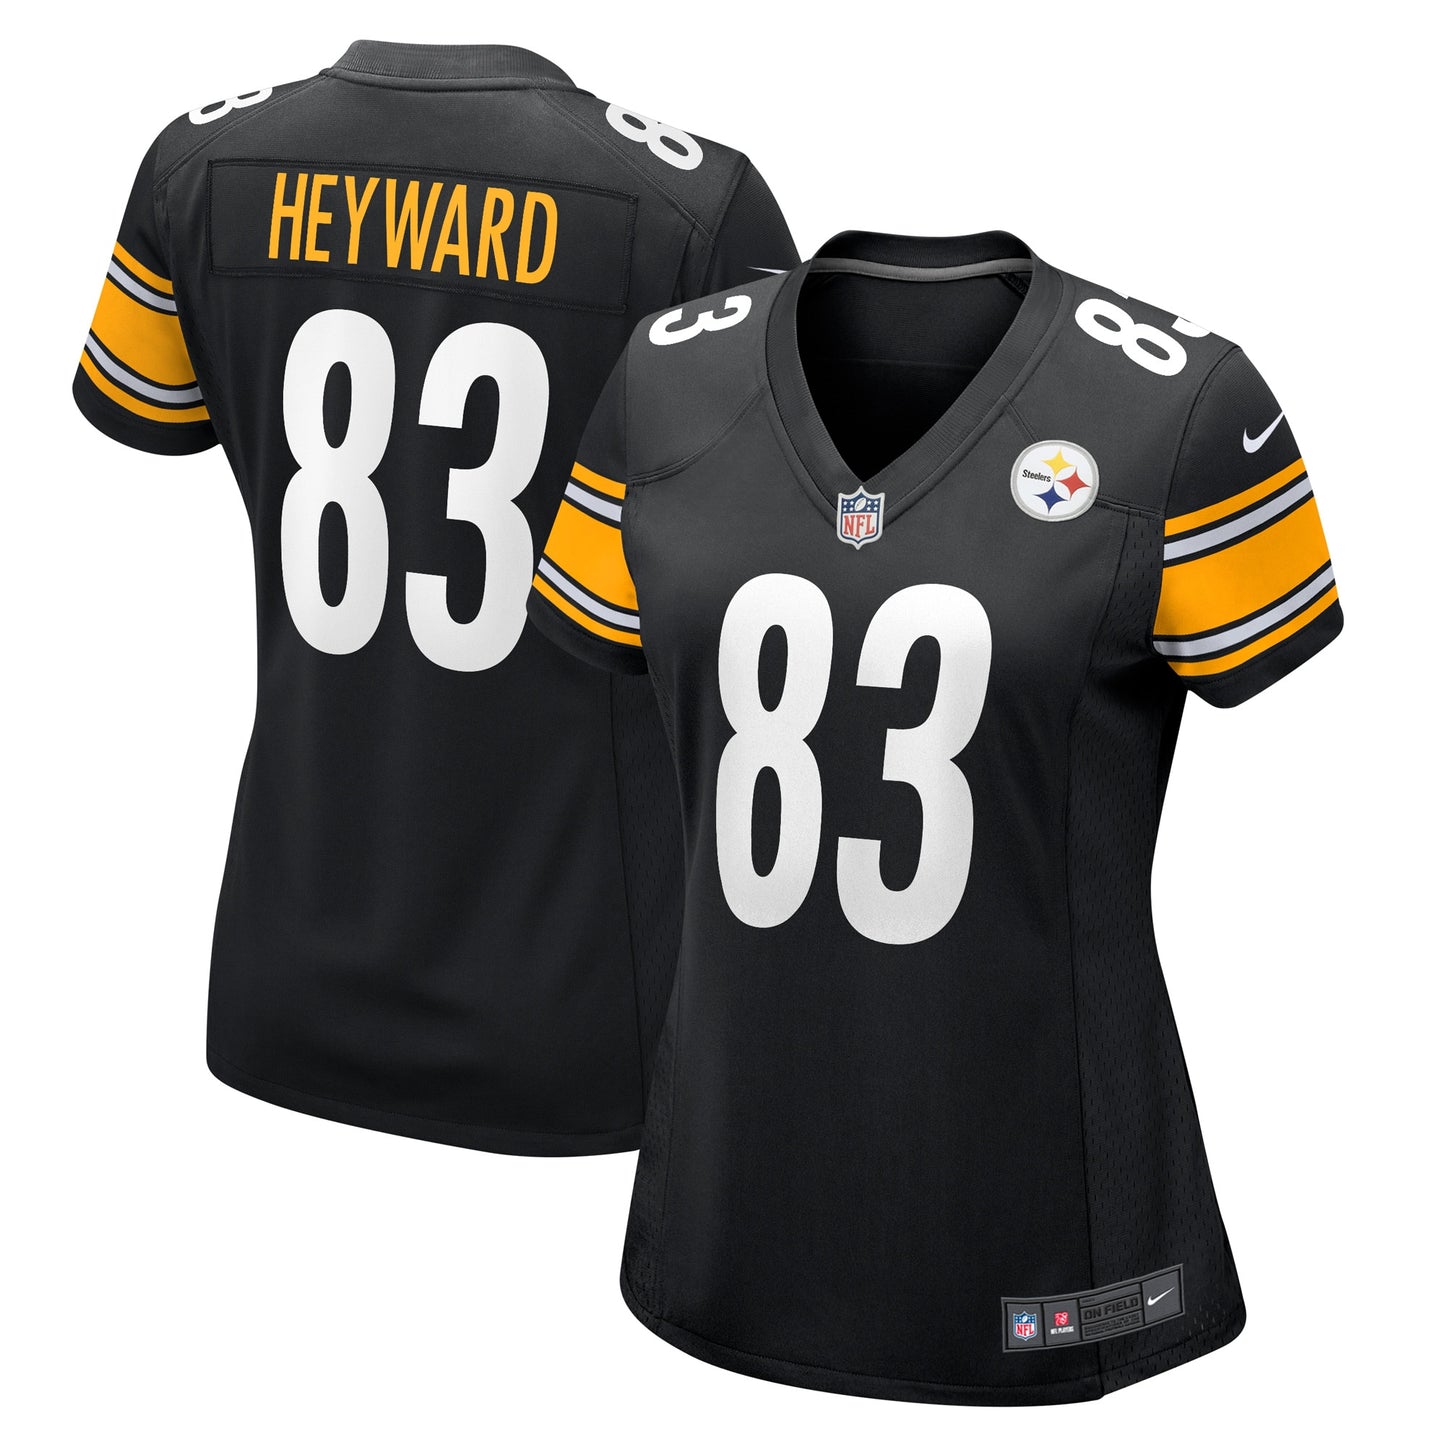 Connor Heyward Pittsburgh Steelers Nike Women's Game Player Jersey - Black